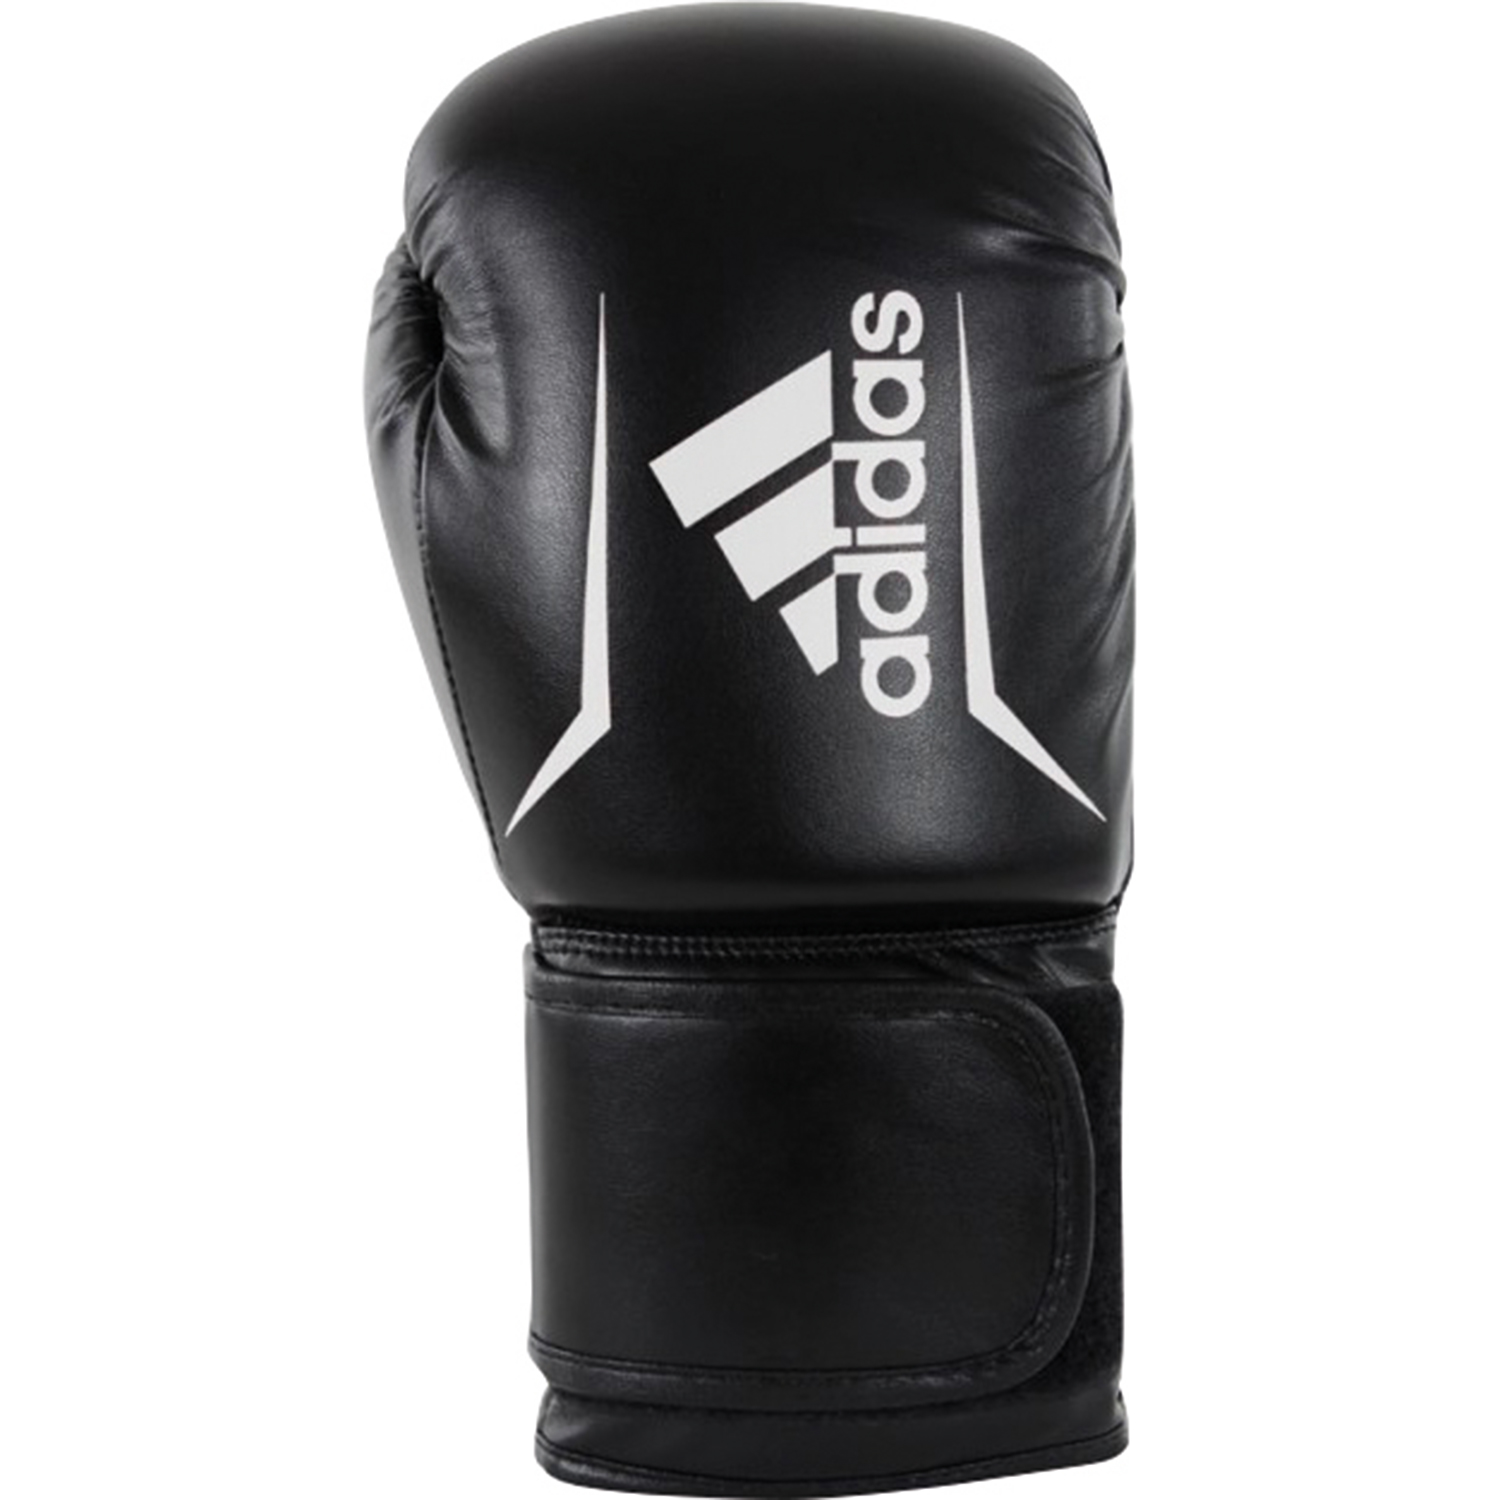 Adidas Speed 50 boxing gloves black/white 10 oz